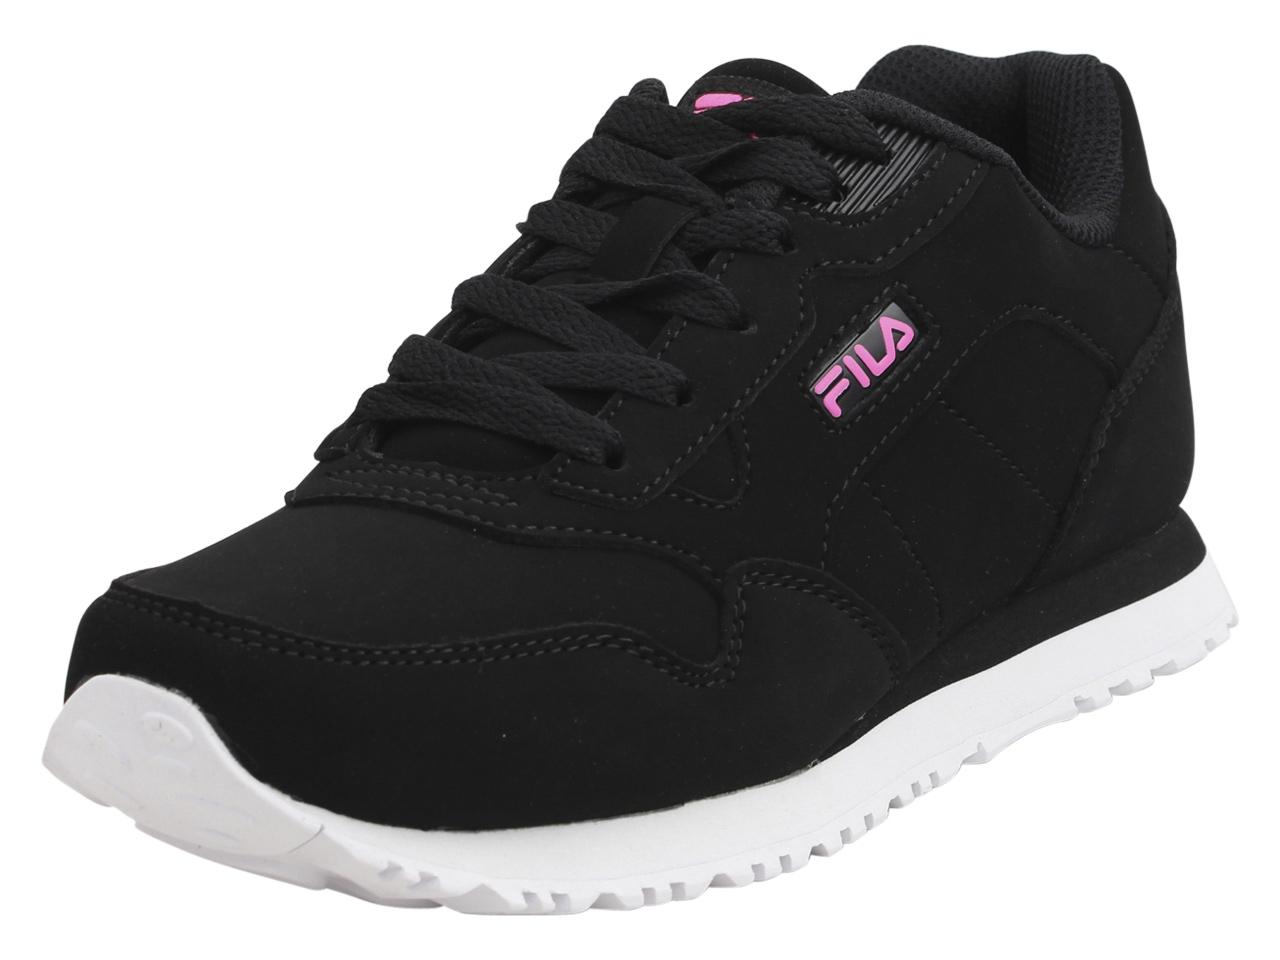 Fila Women's Cress Sneakers Shoes - Black/Knock Out Pink/White - 7 B(M) US